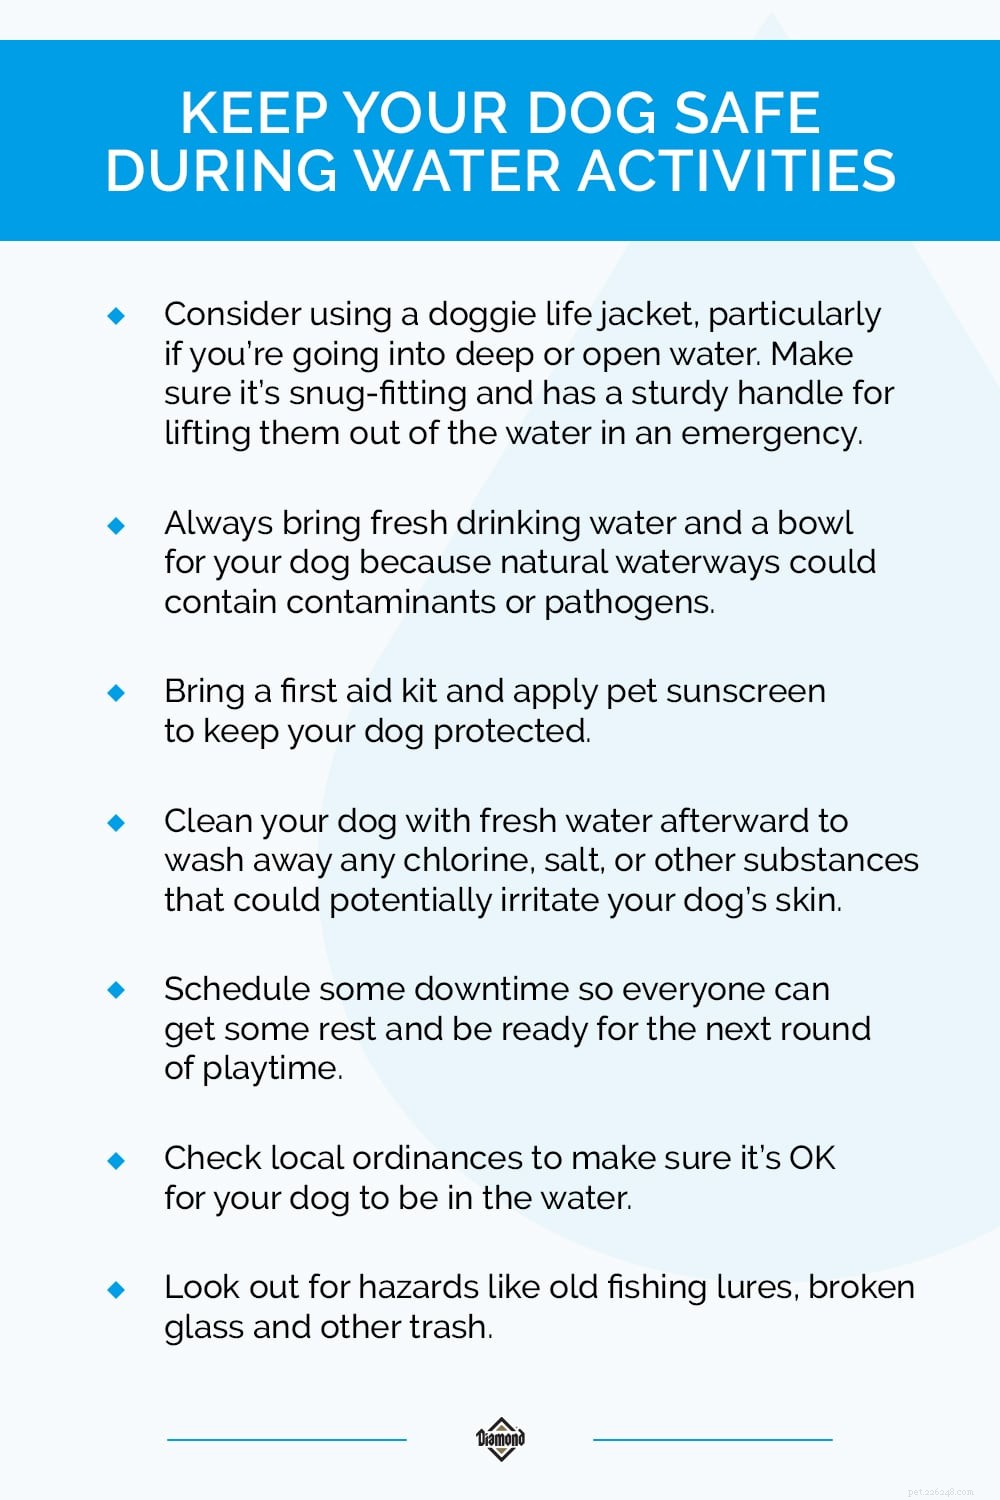 Splashin’ Around Safely:Water Fun for Your Dog